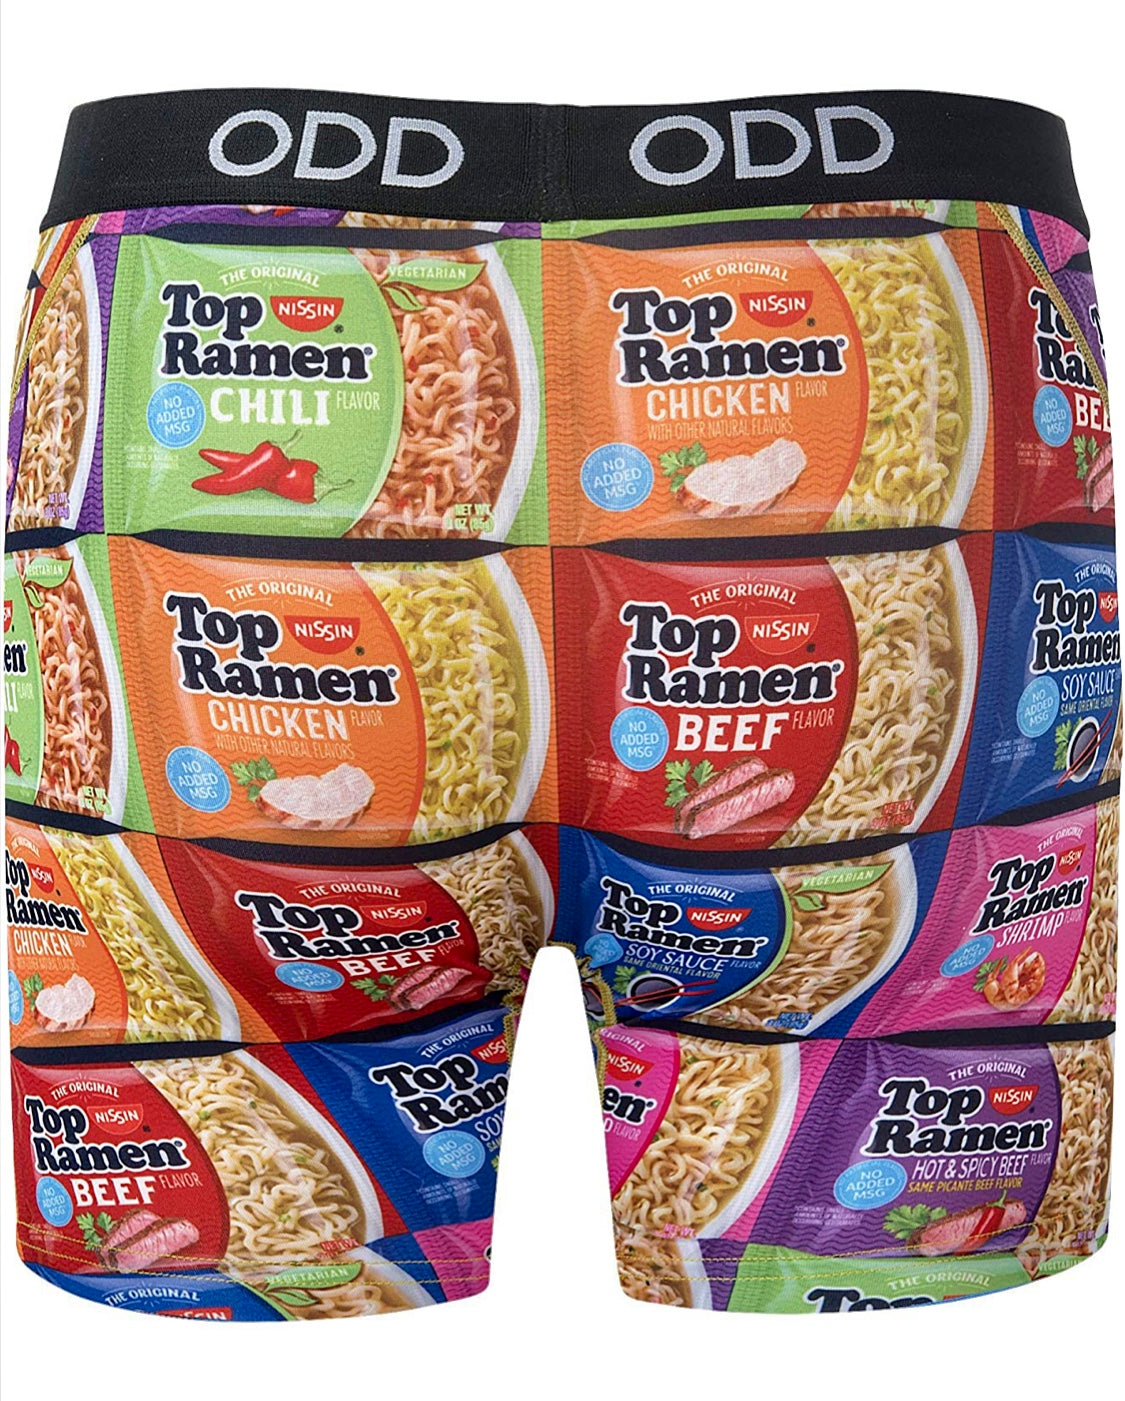  Naruto Shippuden Boxers Men's Ichiraku Ramen Noodle Soup Boxer Briefs  Underwear (Small) Beige : Clothing, Shoes & Jewelry